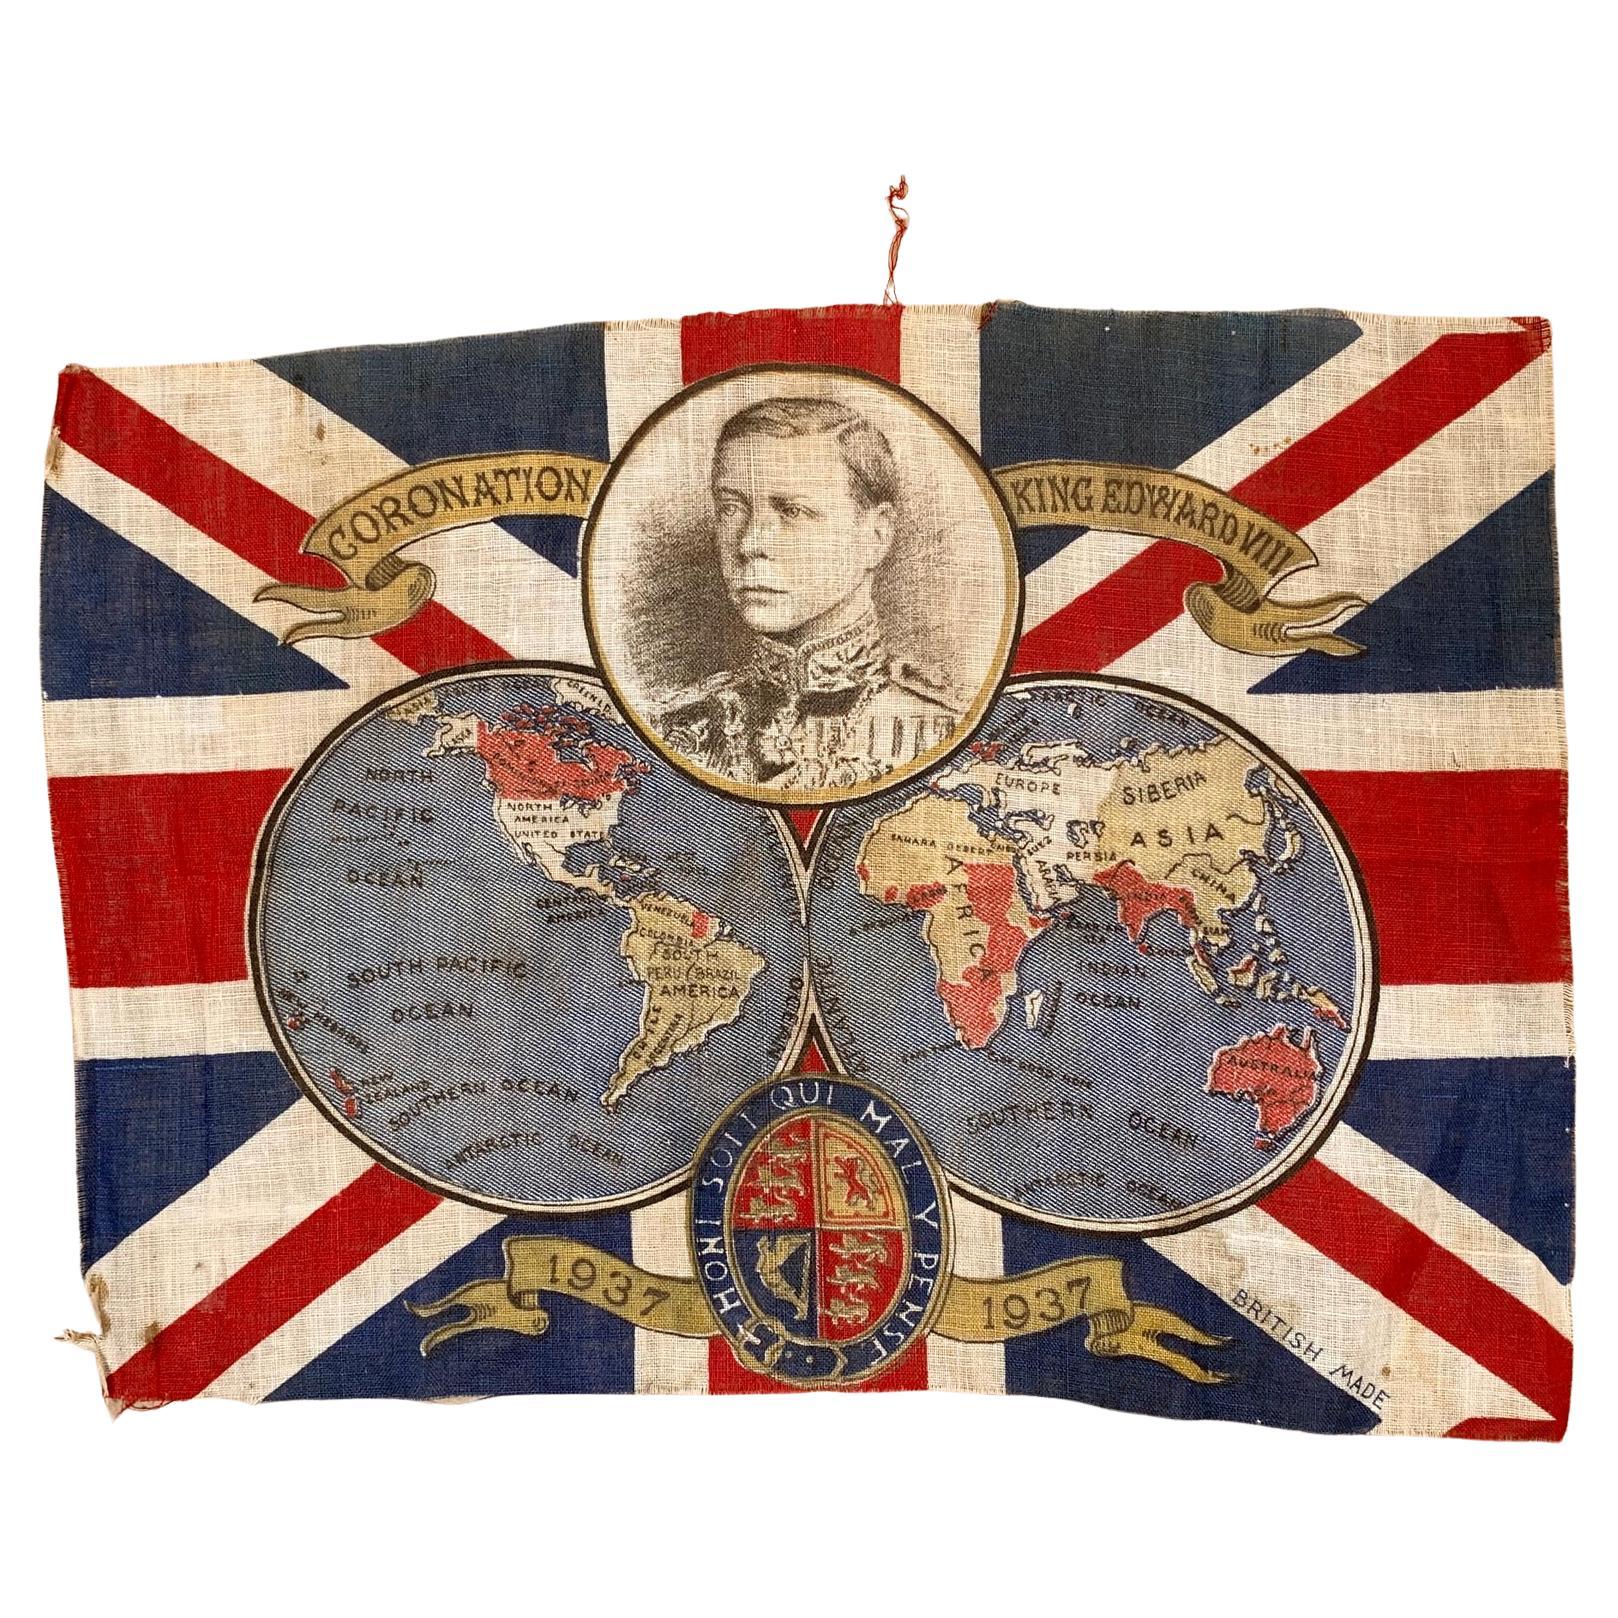  King Edward VIII Coronation Flag 1937